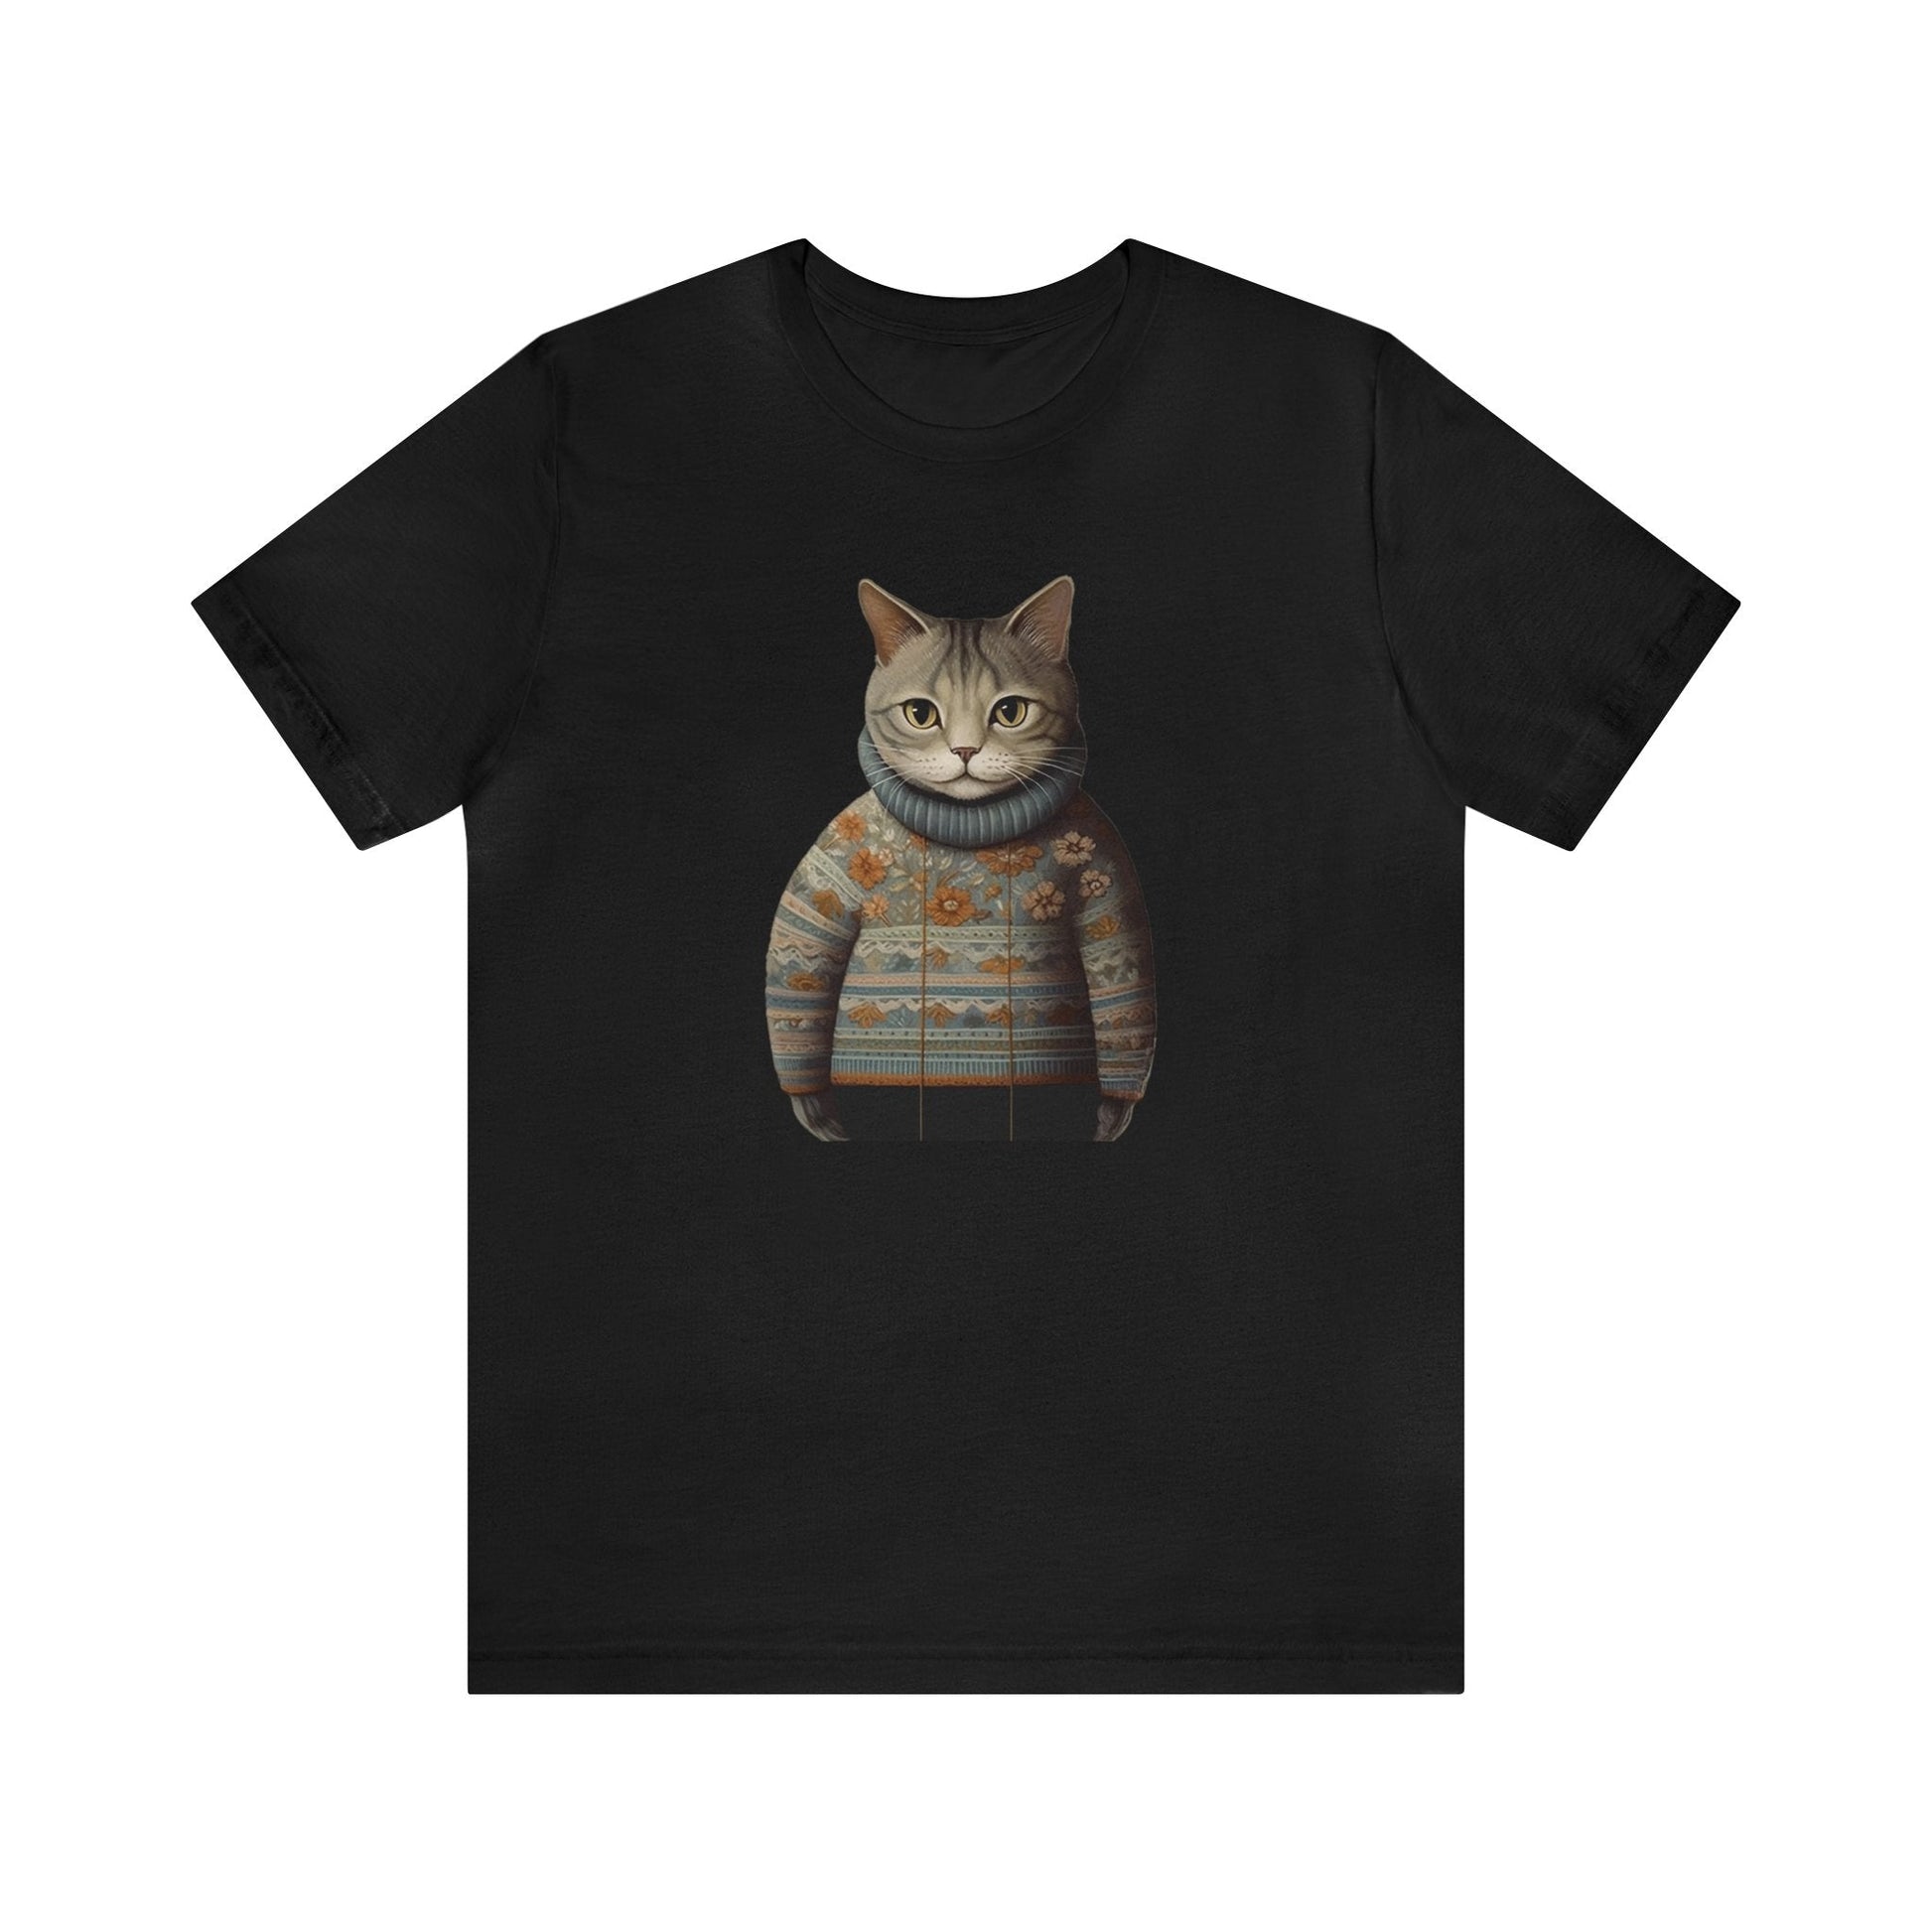 Cats in Sweaters Sweatshirt, Cute Artistic Illustration, Beautiful Astethic Cat Illustration - FlooredByArt